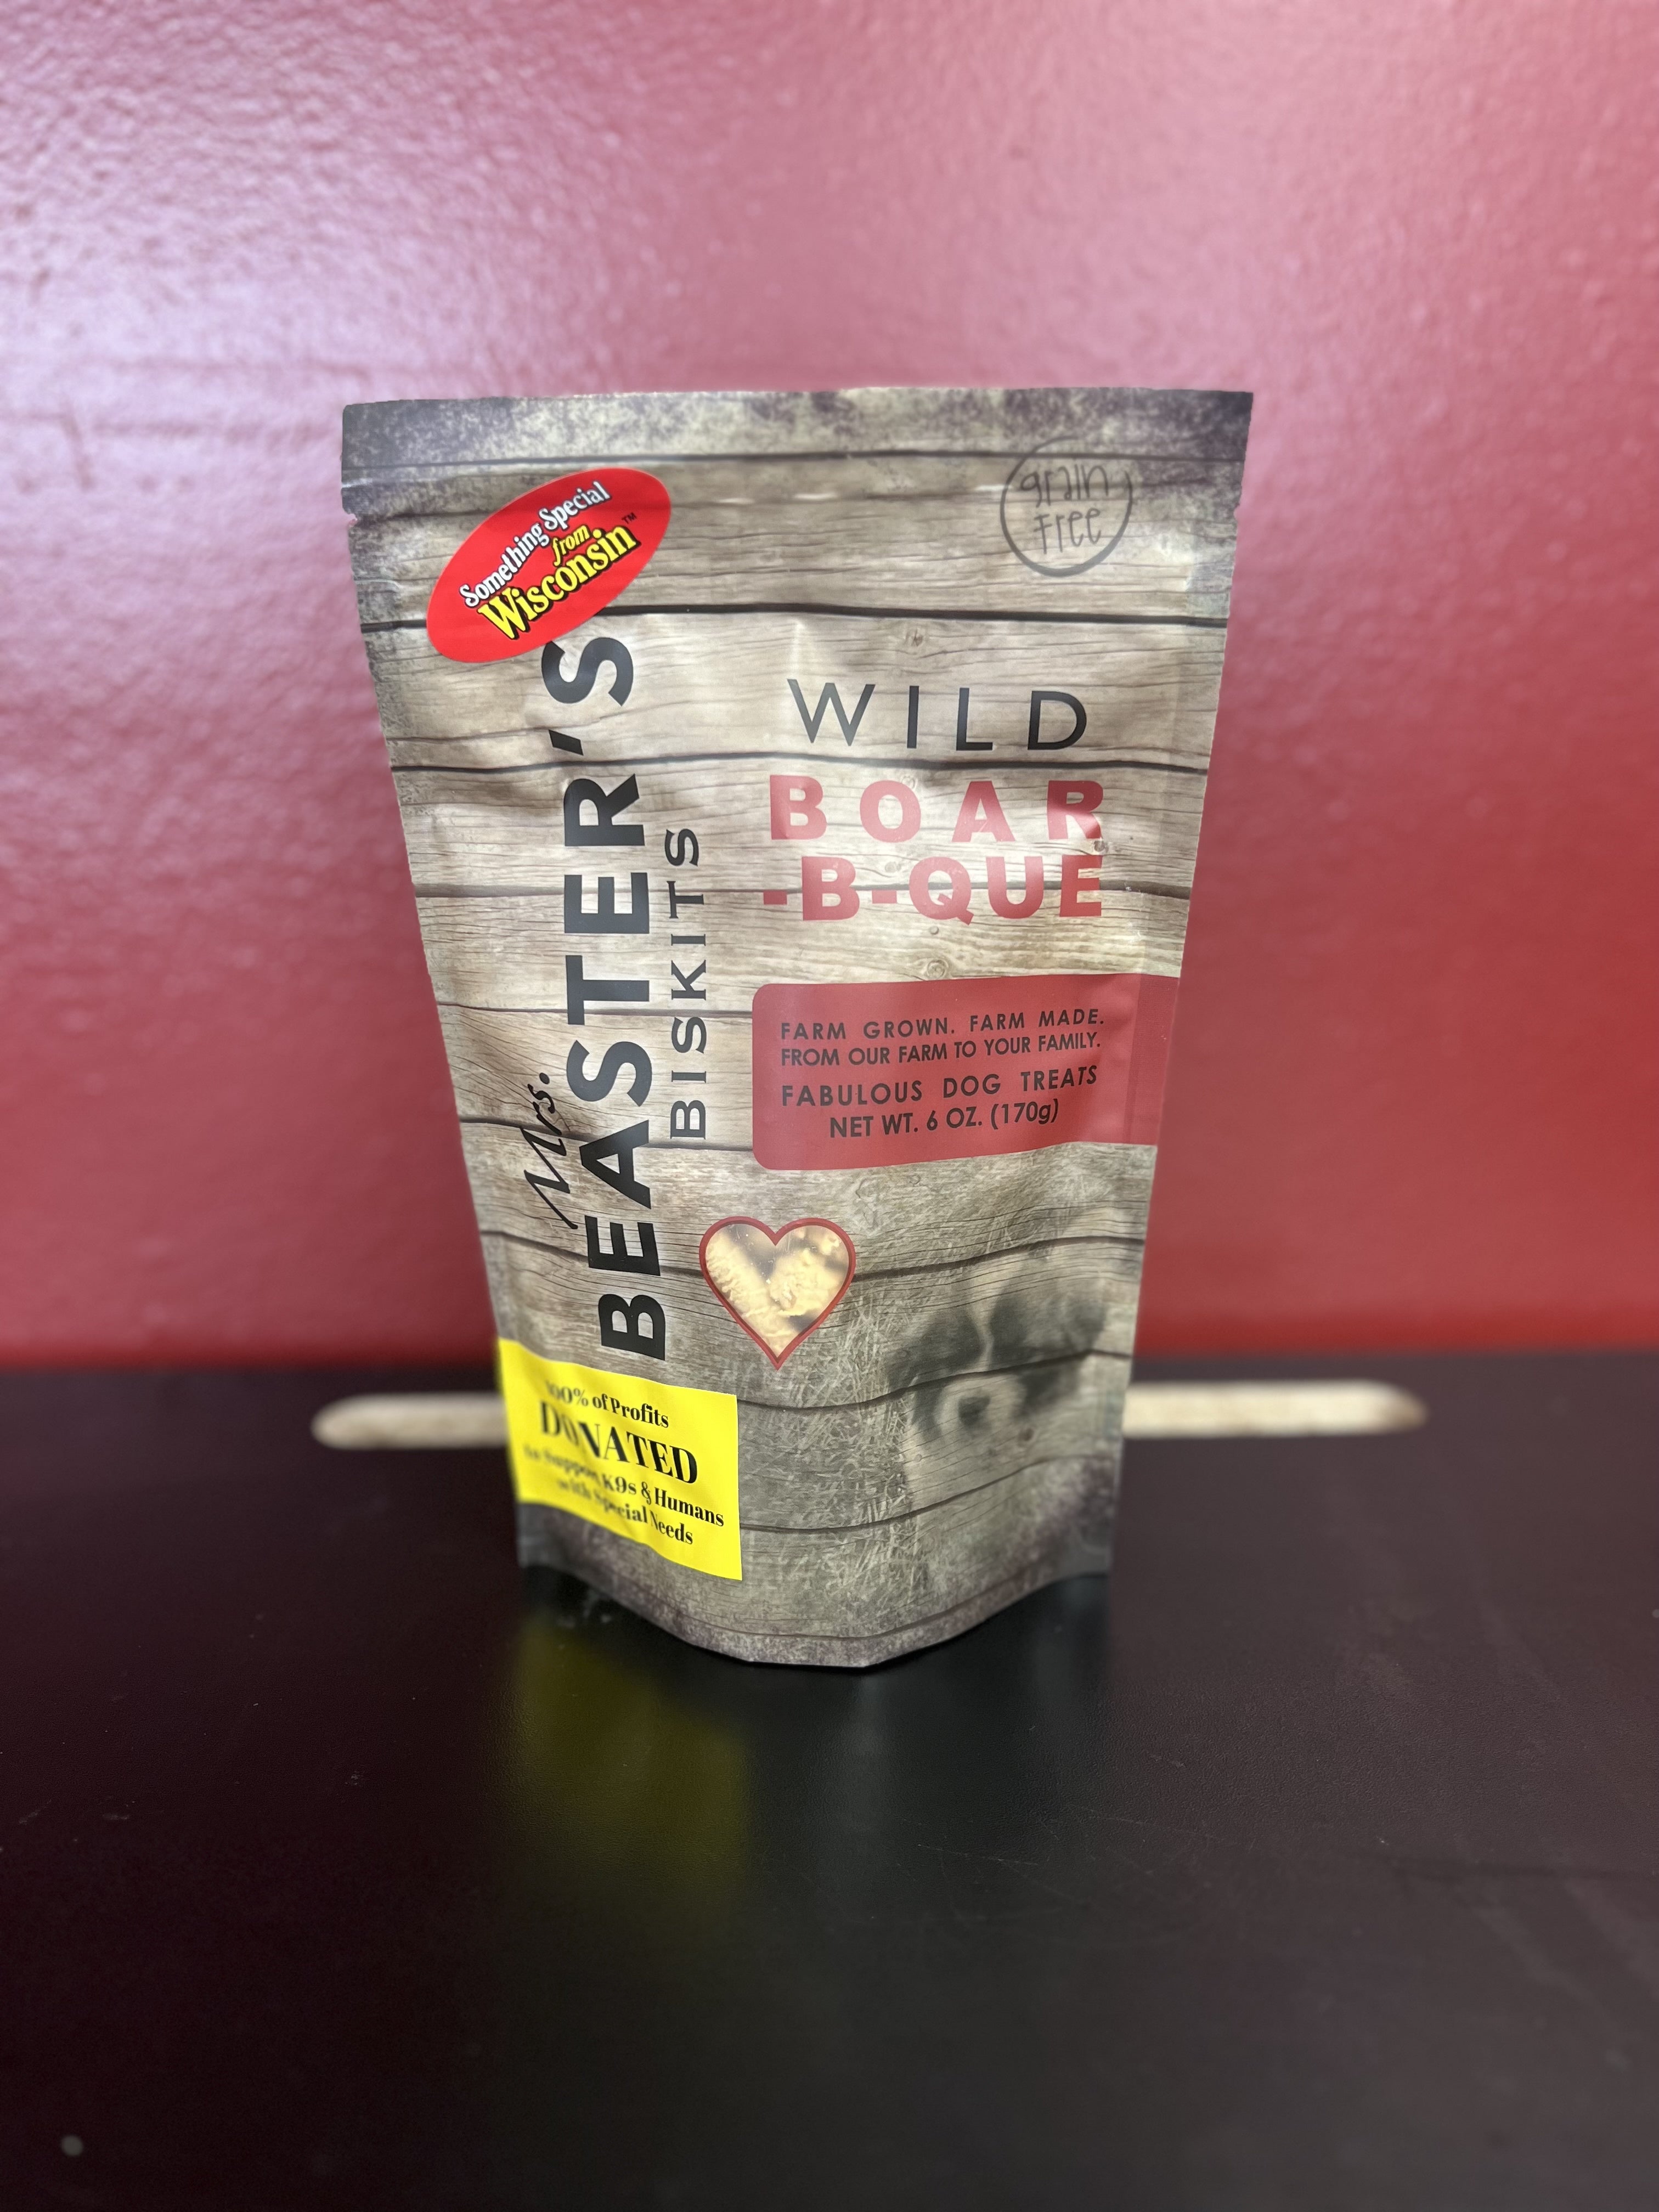 Mrs. Beaster’s Grain-Free Biskits Wild Boar-B-Que